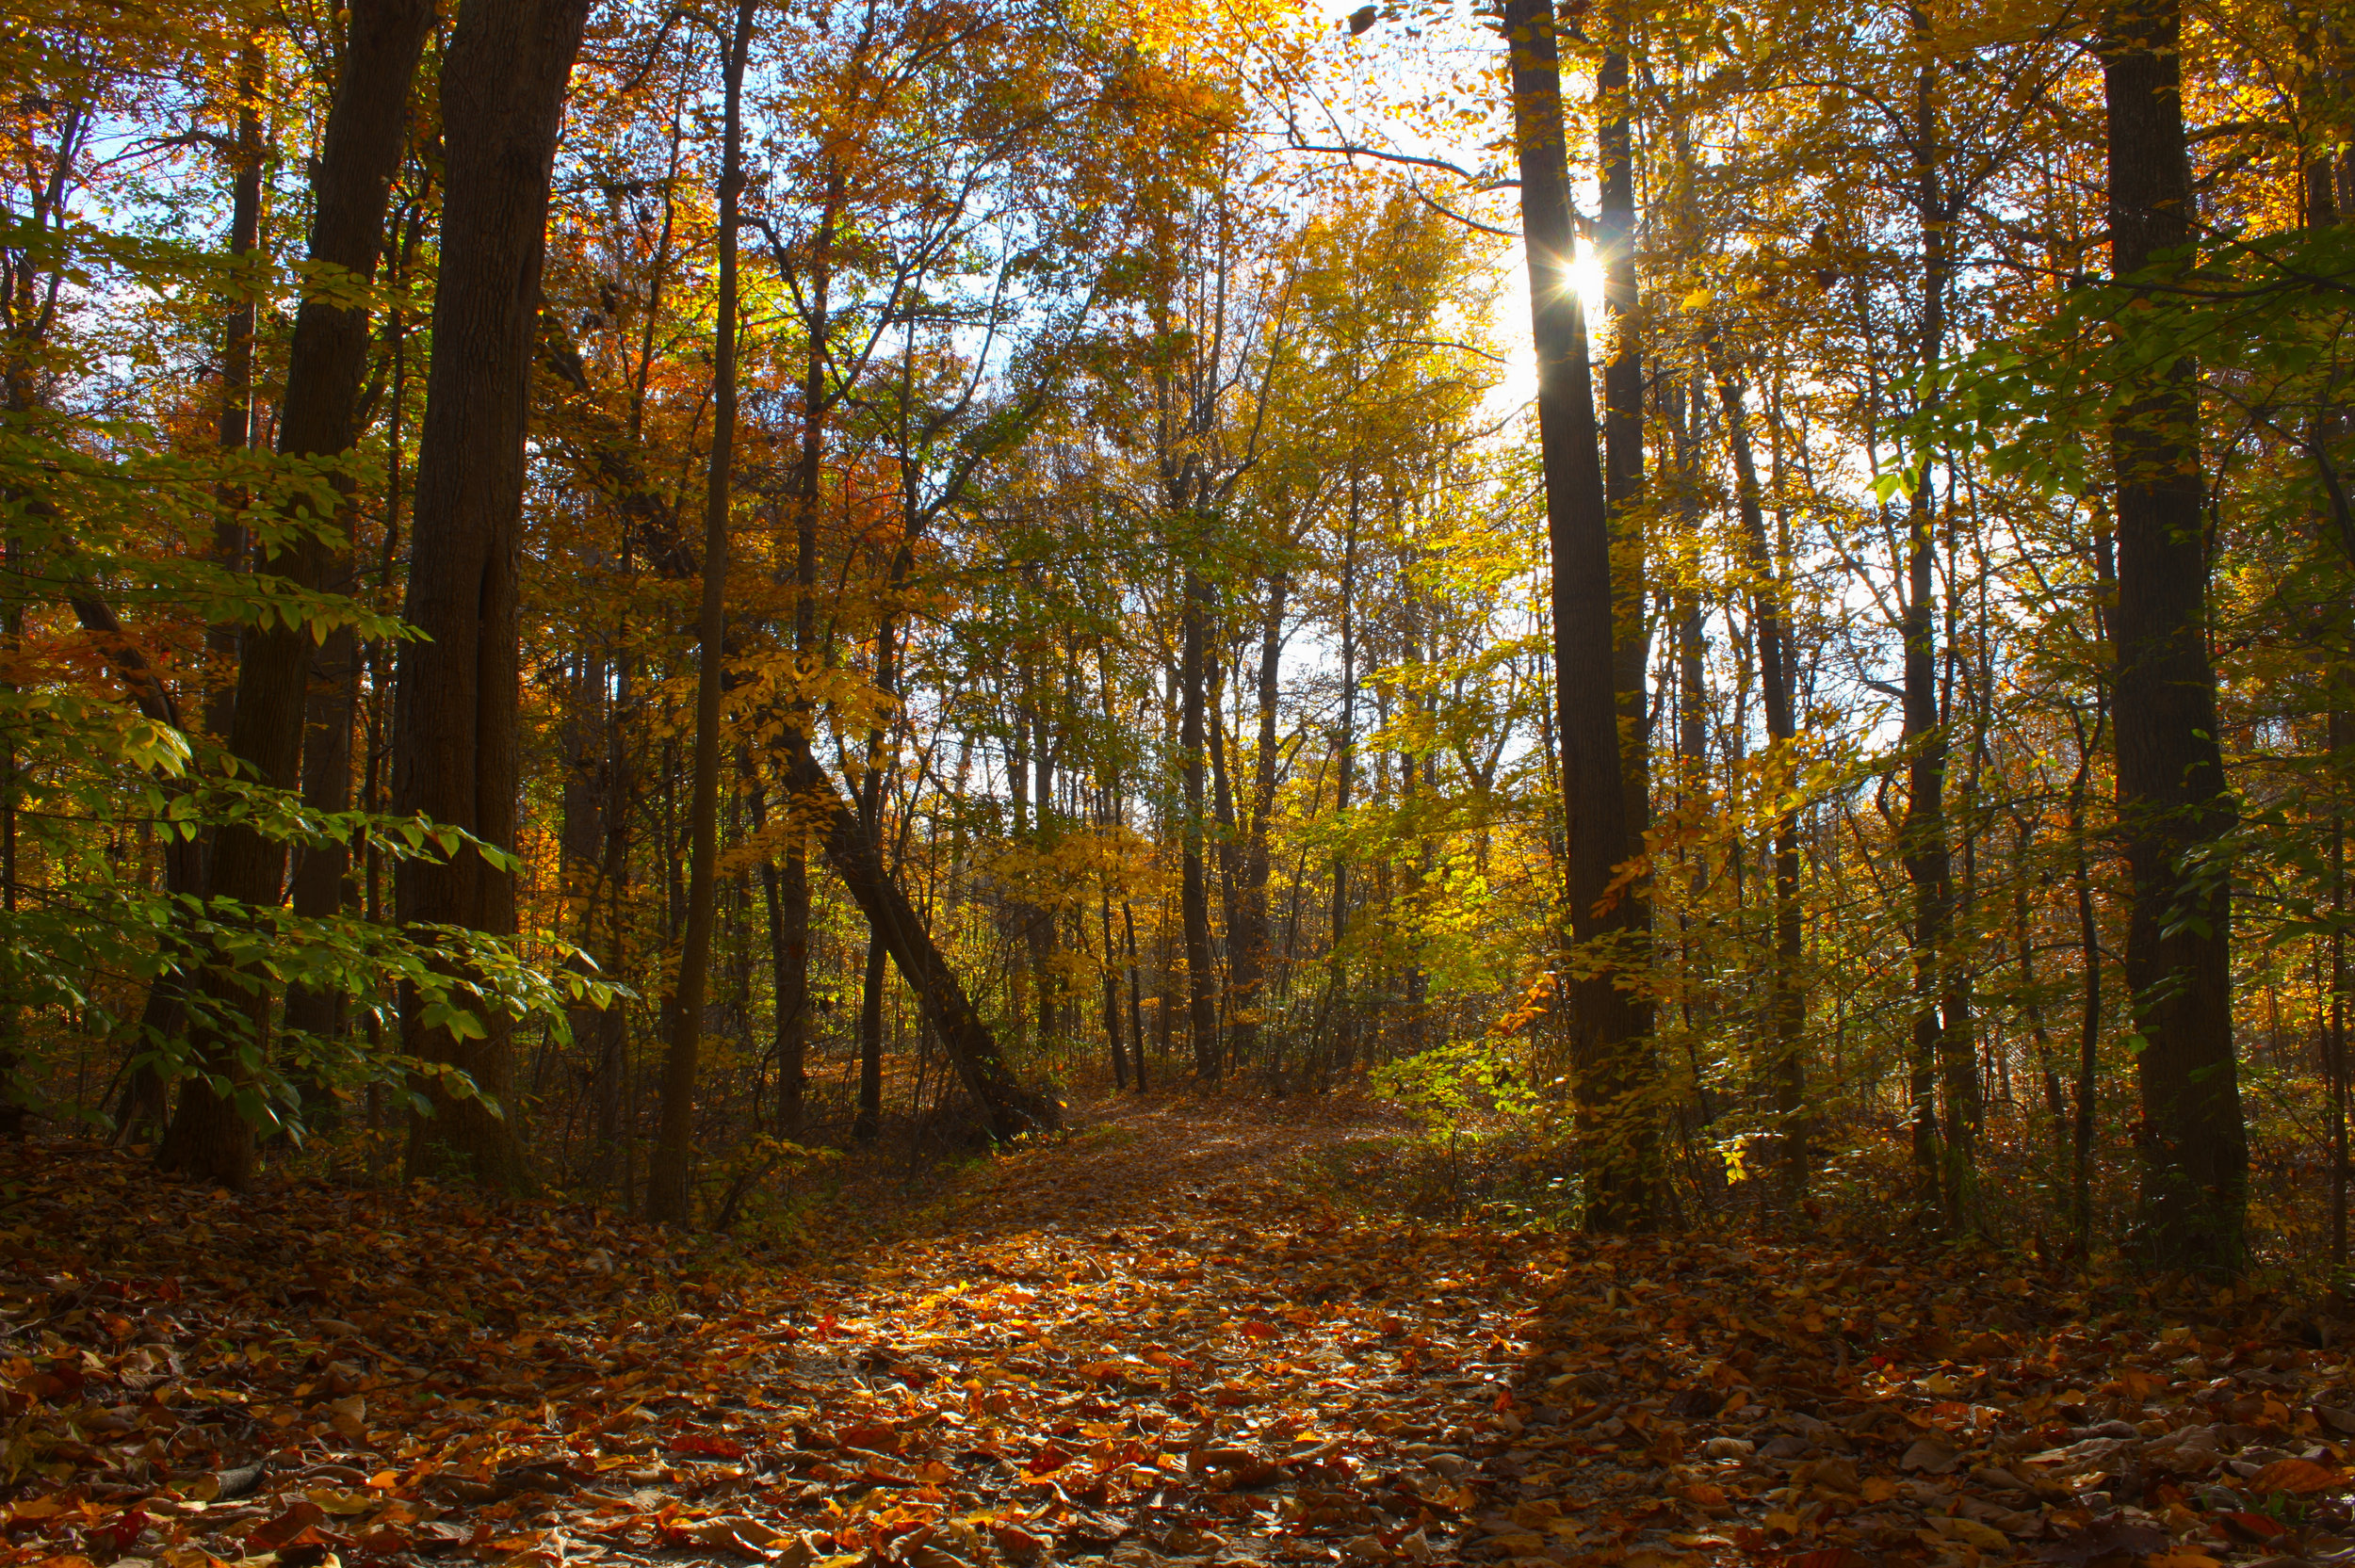 Autumn scene in the woods of the Wayne Shipman Memorial Trail